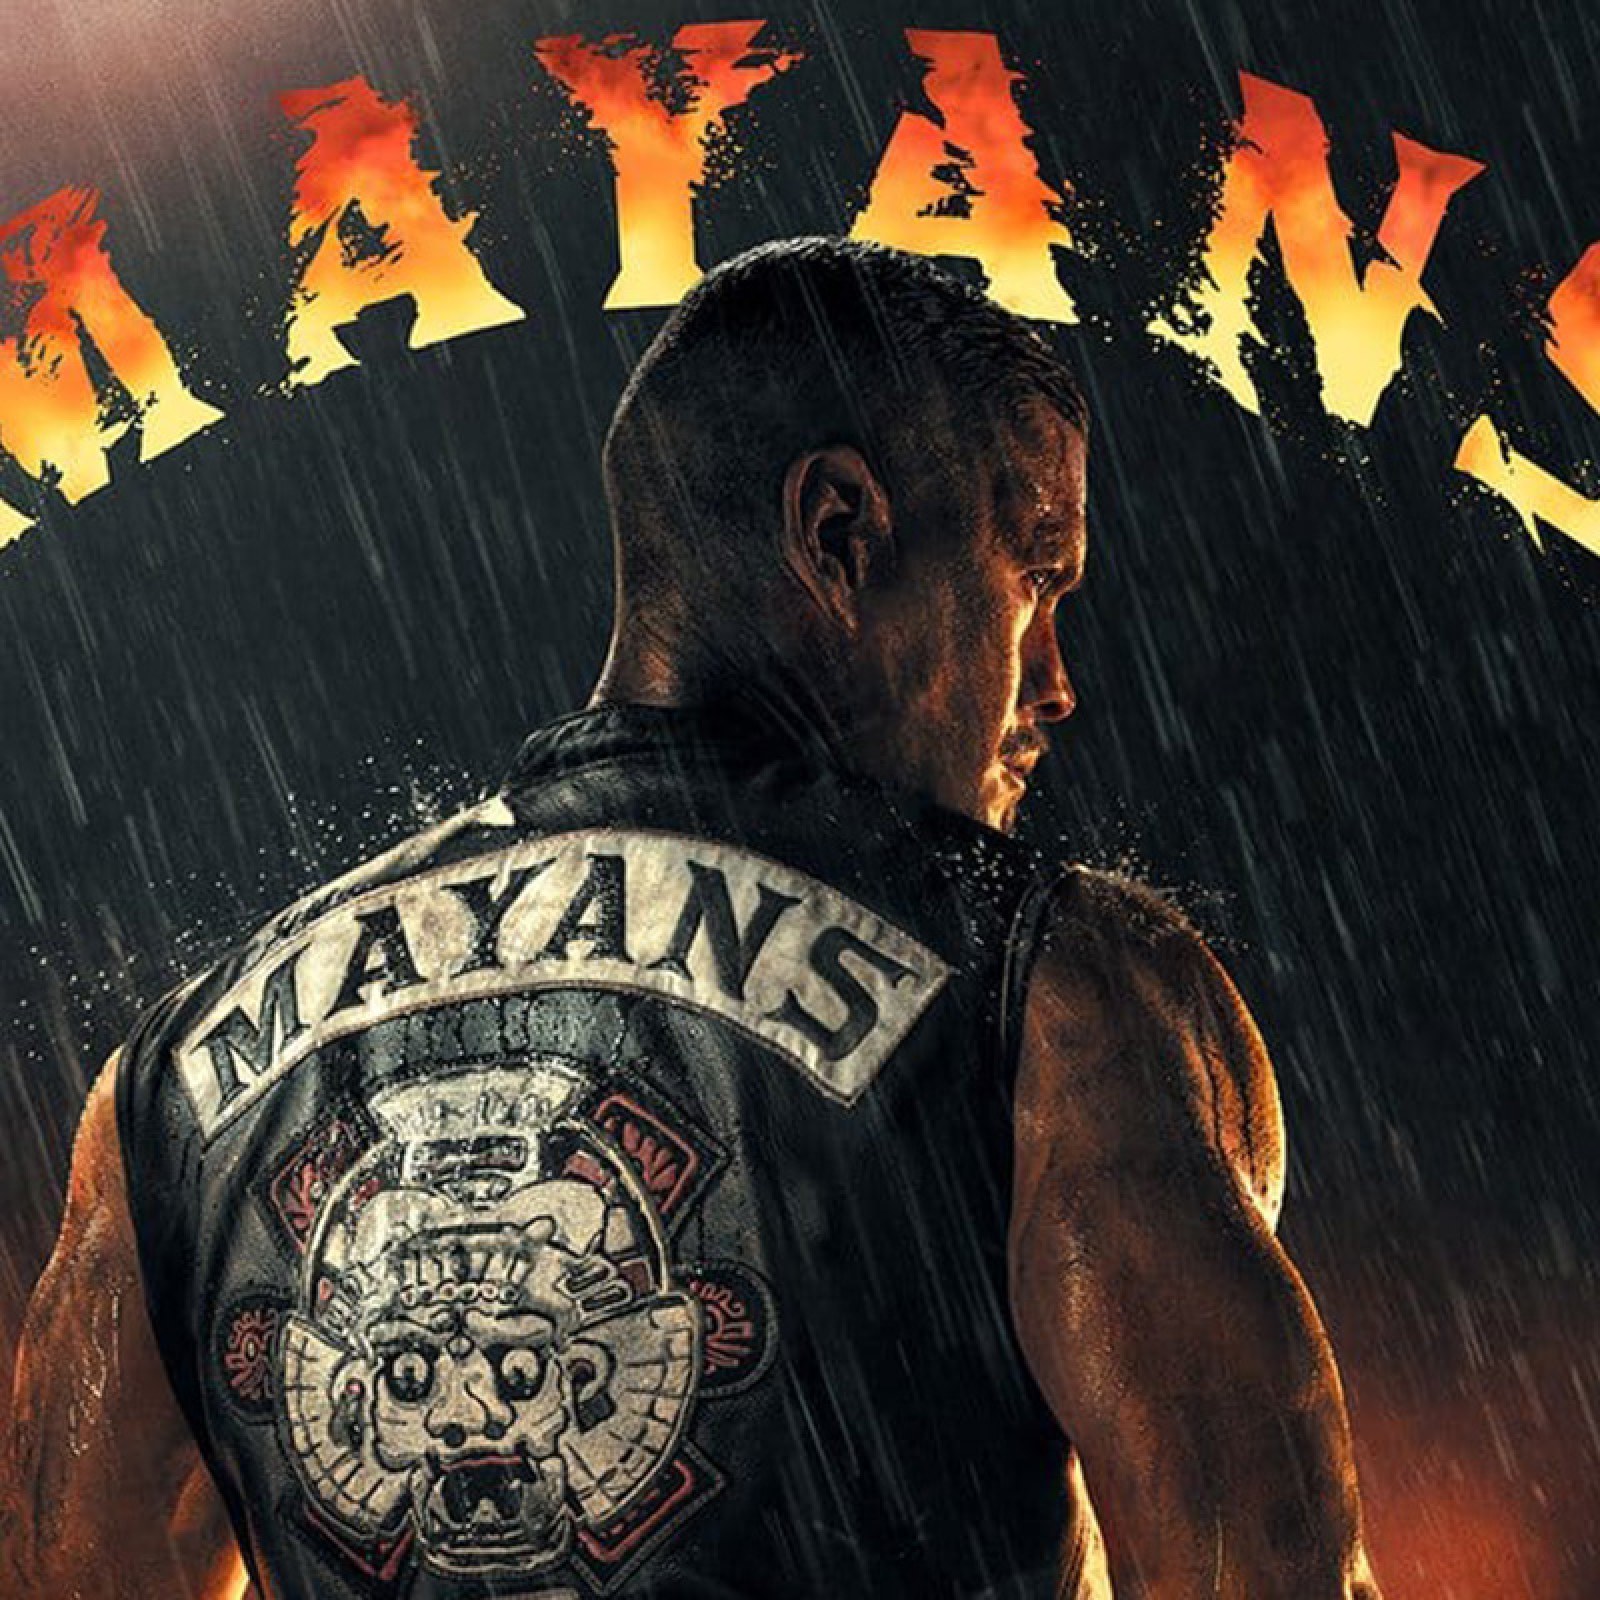 Mayans MC' Season 4: Has The Show Been Renewed?